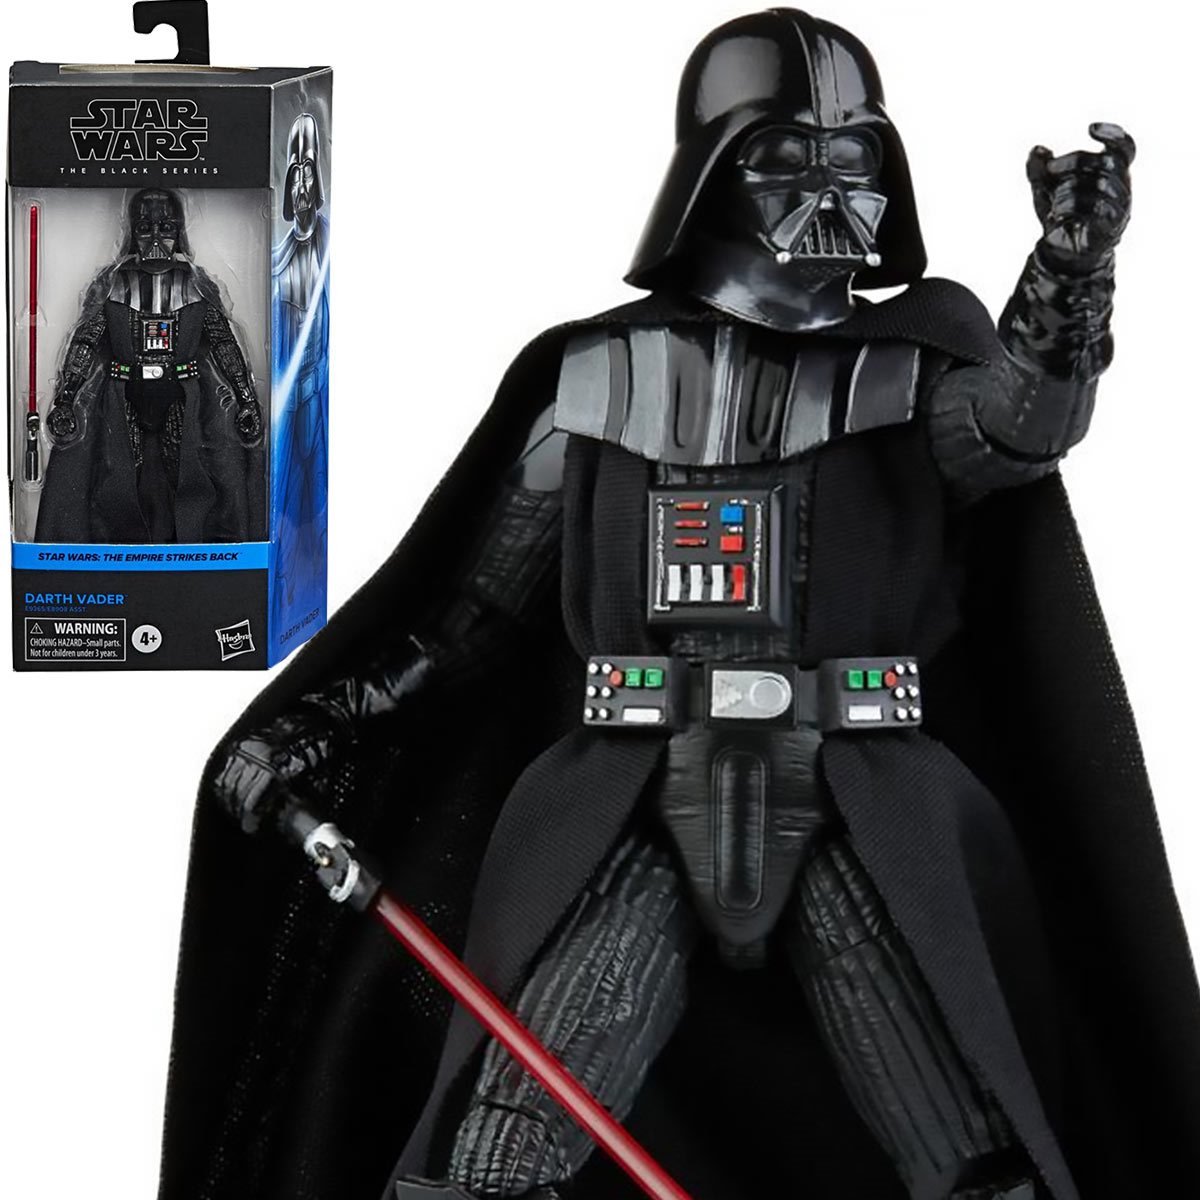 Hasbro Star Wars Black Series Darth Vader 6 inch Action Figure for sale online